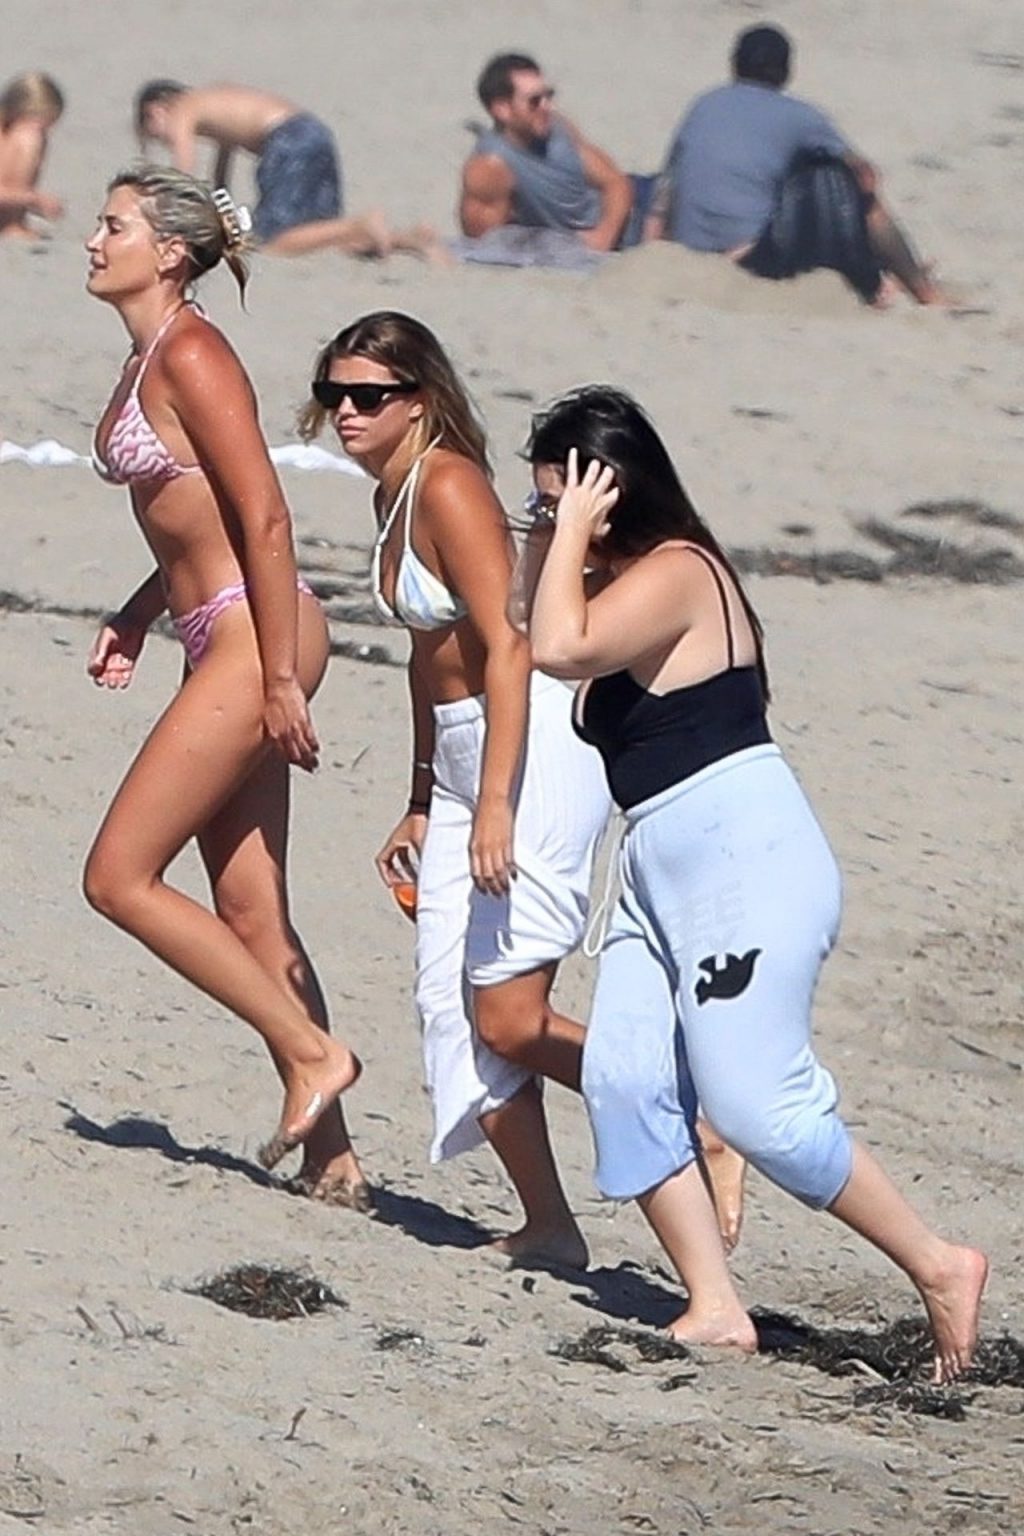 Sofia Richie Enjoys a Beach Day with Her Friends (83 Photos)